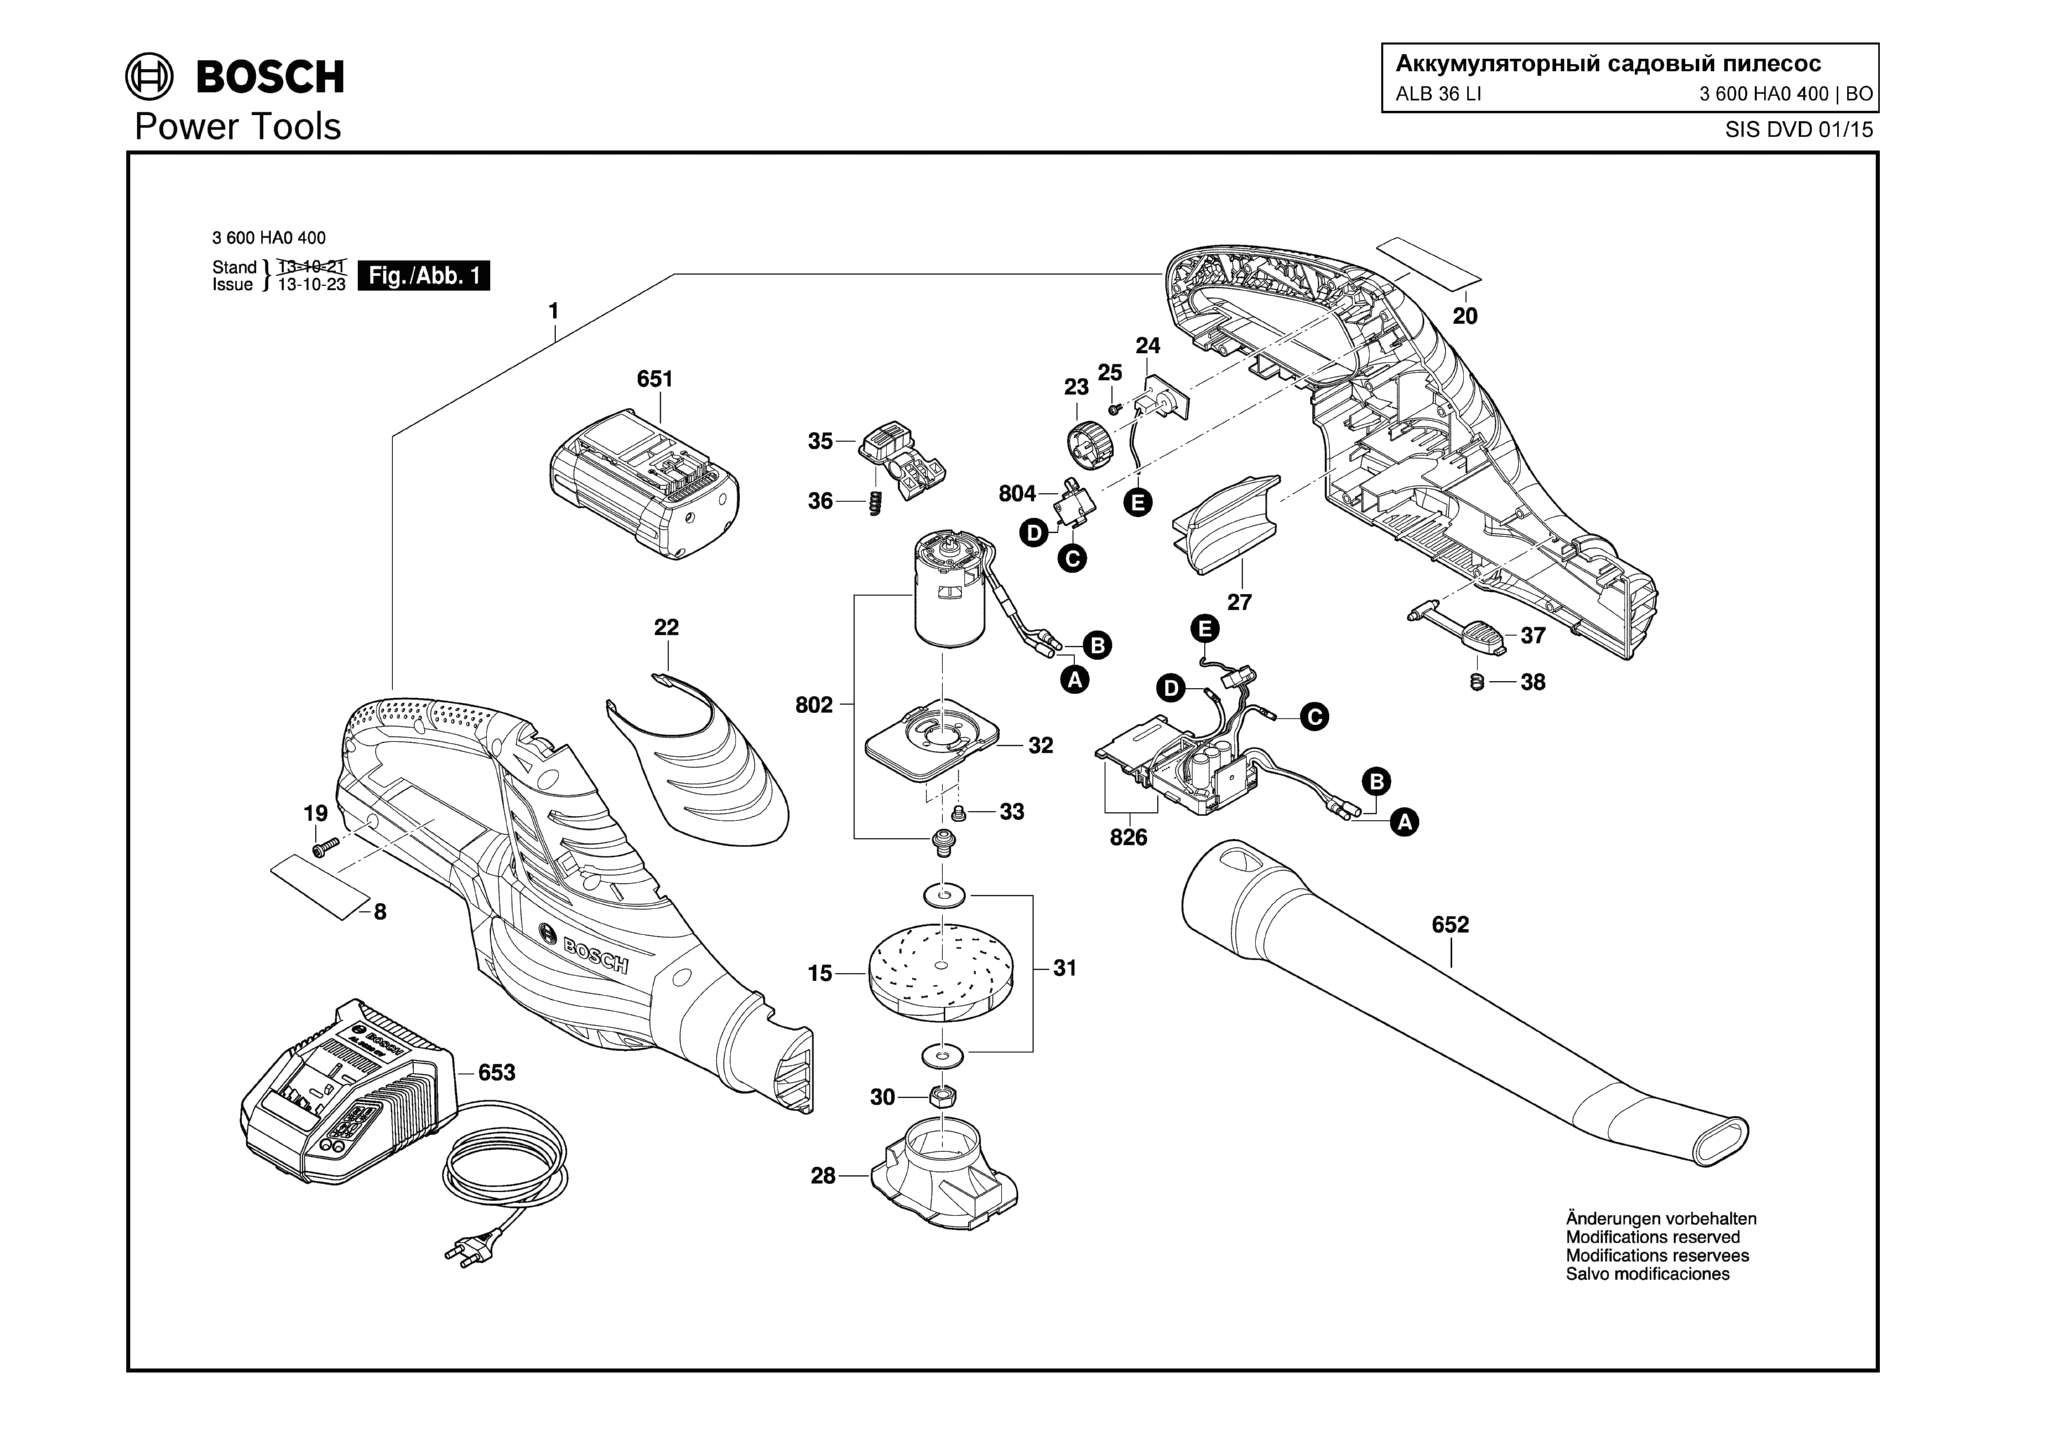 Запчасти, схема и деталировка Bosch ALB 36 LI (ТИП 3600HA0400)